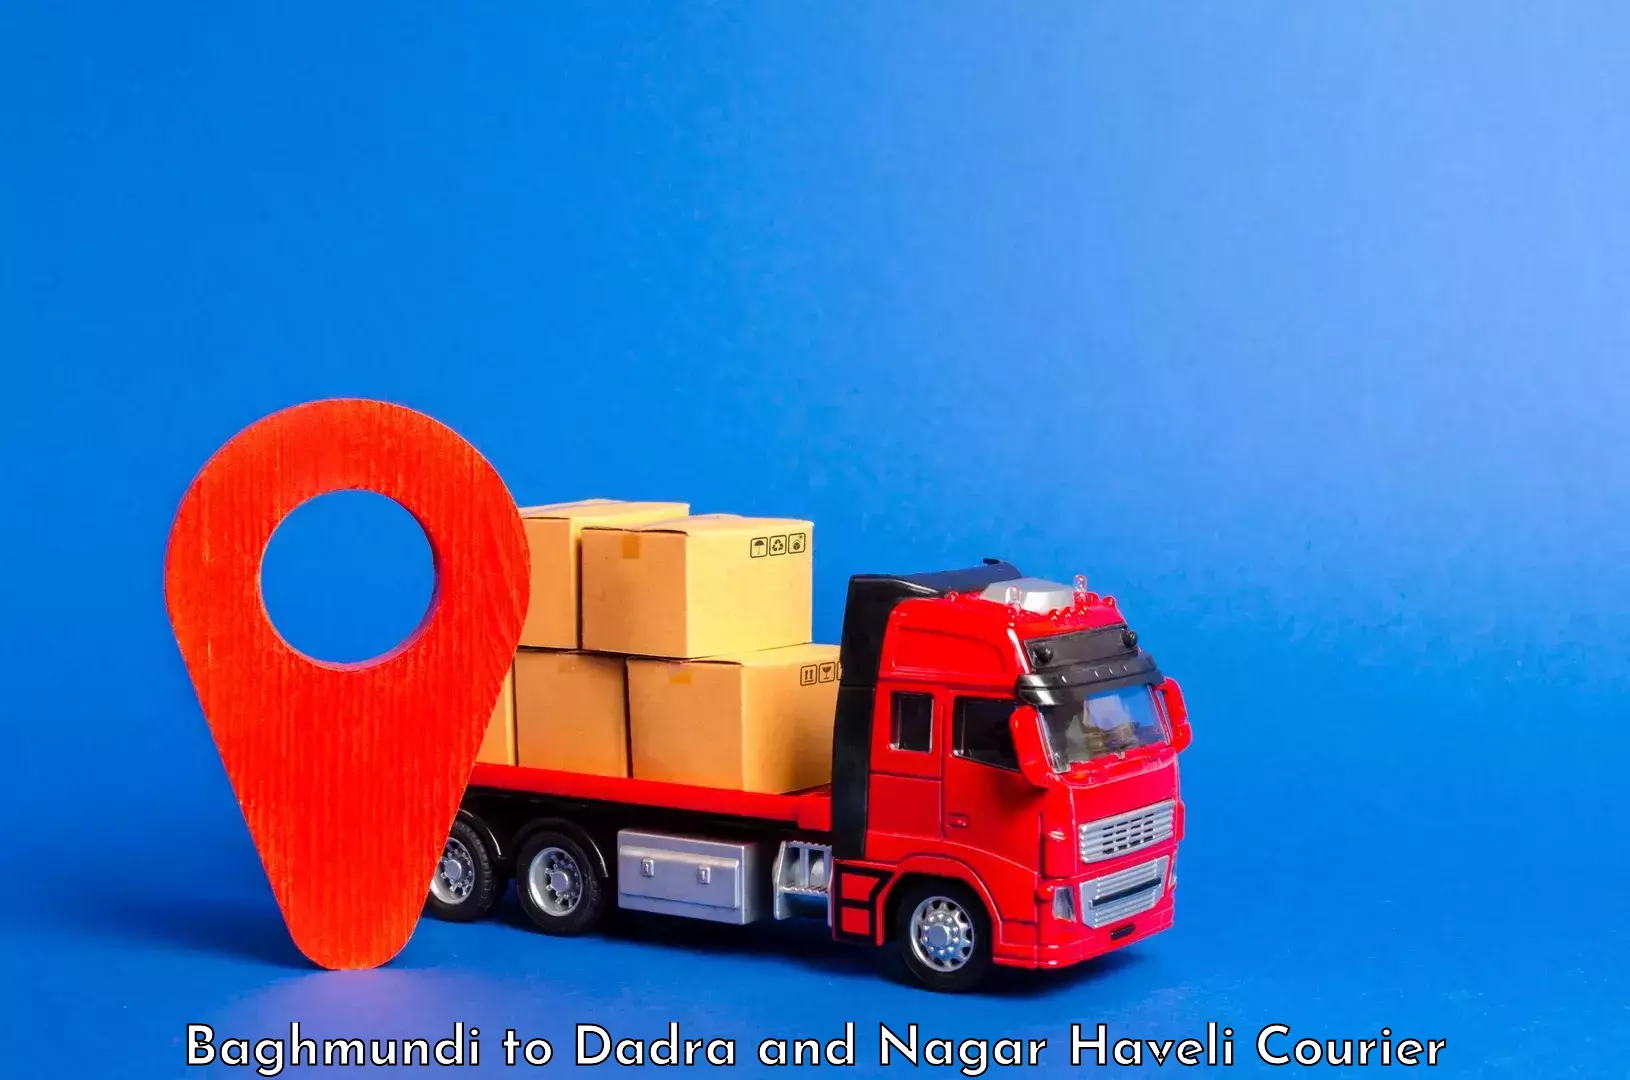 Baggage delivery optimization in Baghmundi to Dadra and Nagar Haveli